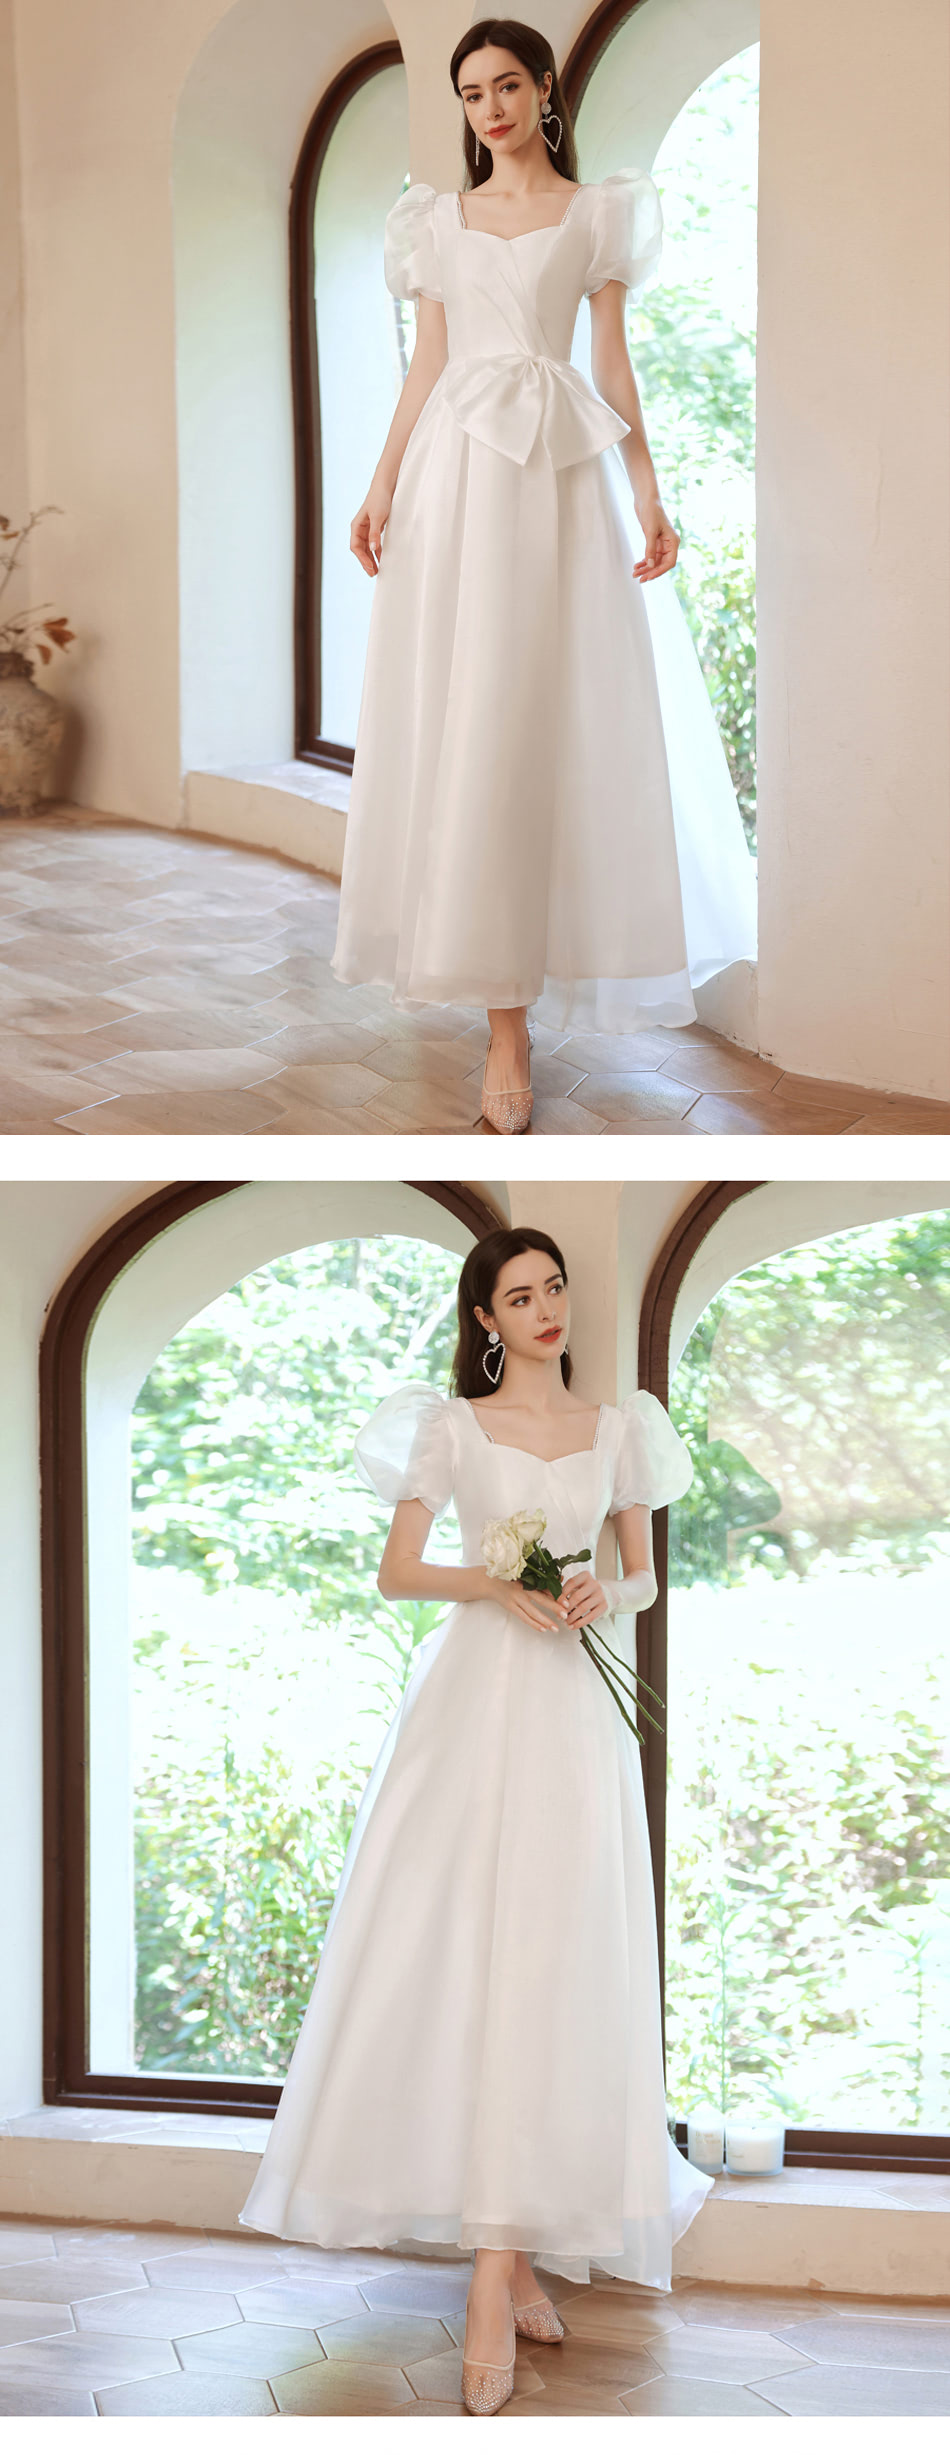 White-Short-Puff-Sleeve-Prom-Formal-Ball-Gown-Evening-Dress13.jpg